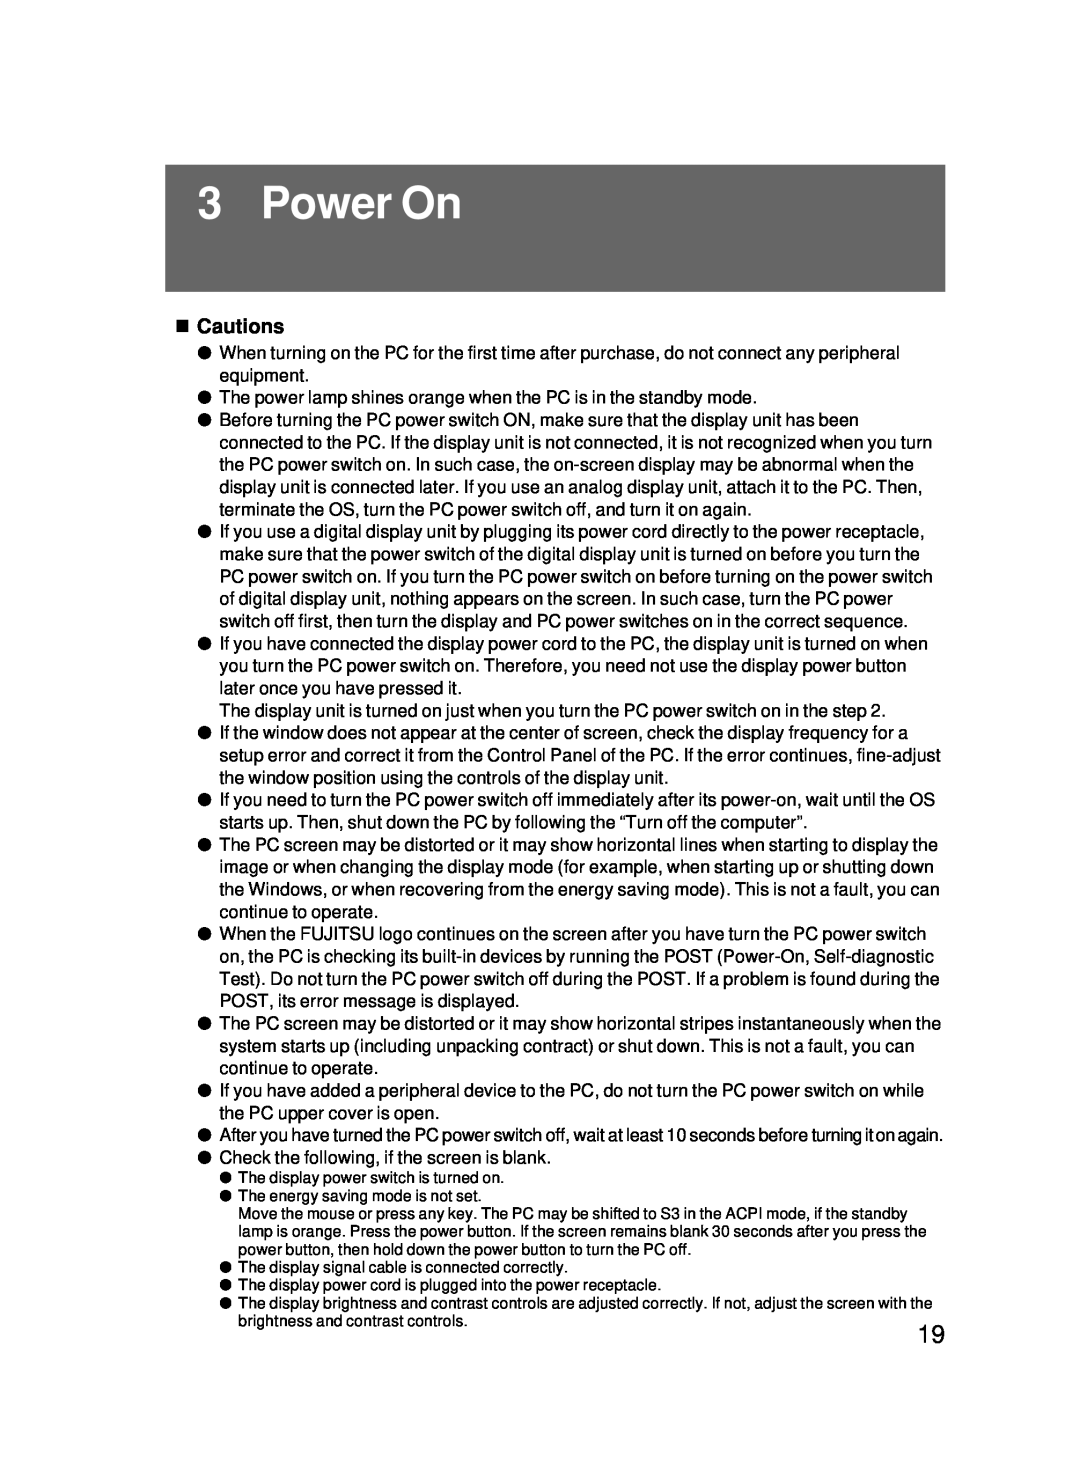 Fujitsu 5000 user manual Power On, Cautions 